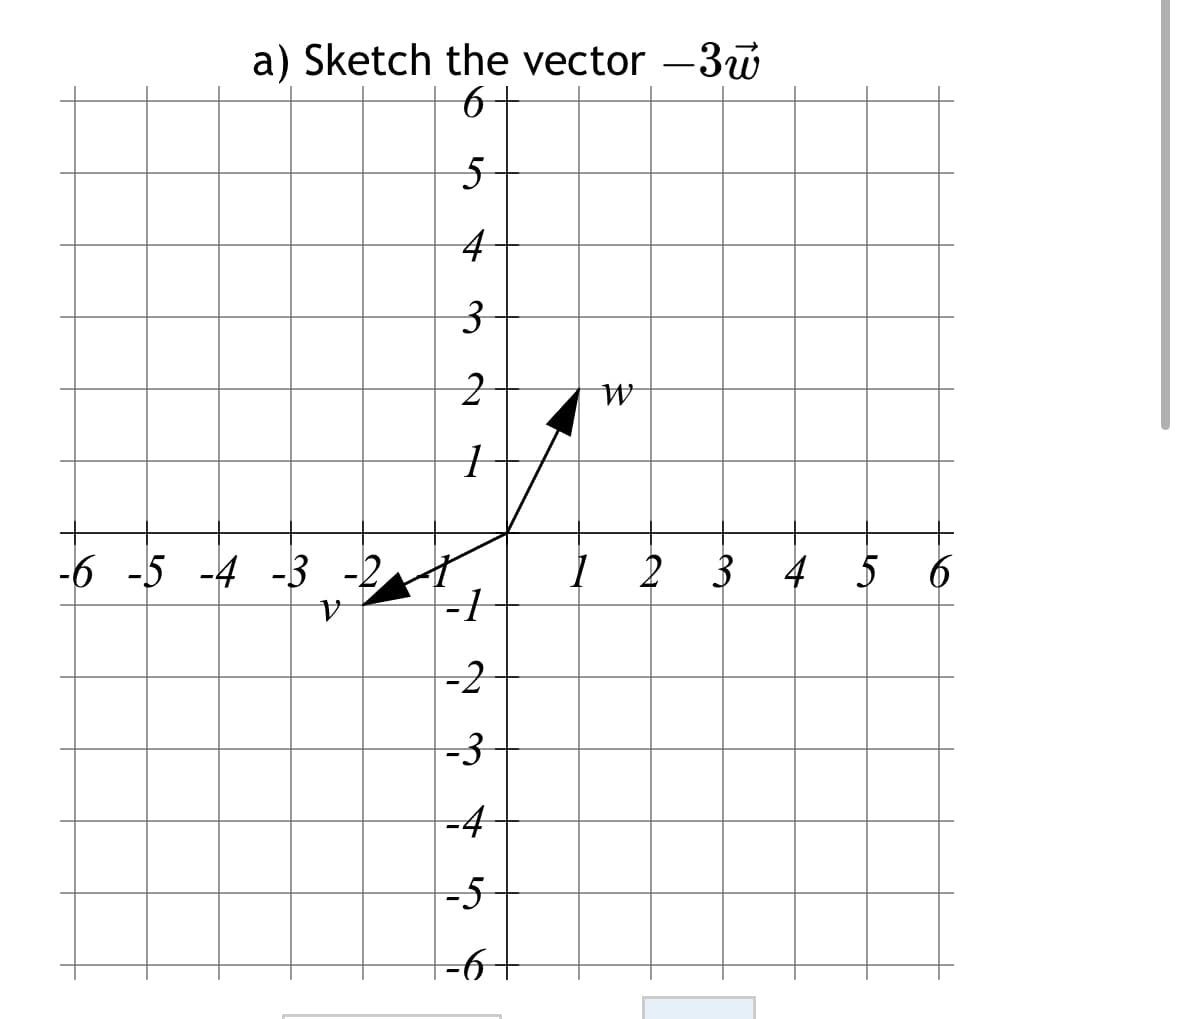 a) Sketch the vector -3
6
5
4
3
2
1
-6 -5 -4 -3
F-1
-2
-3
-4
-5
|-6
W
1 2
3 4 5